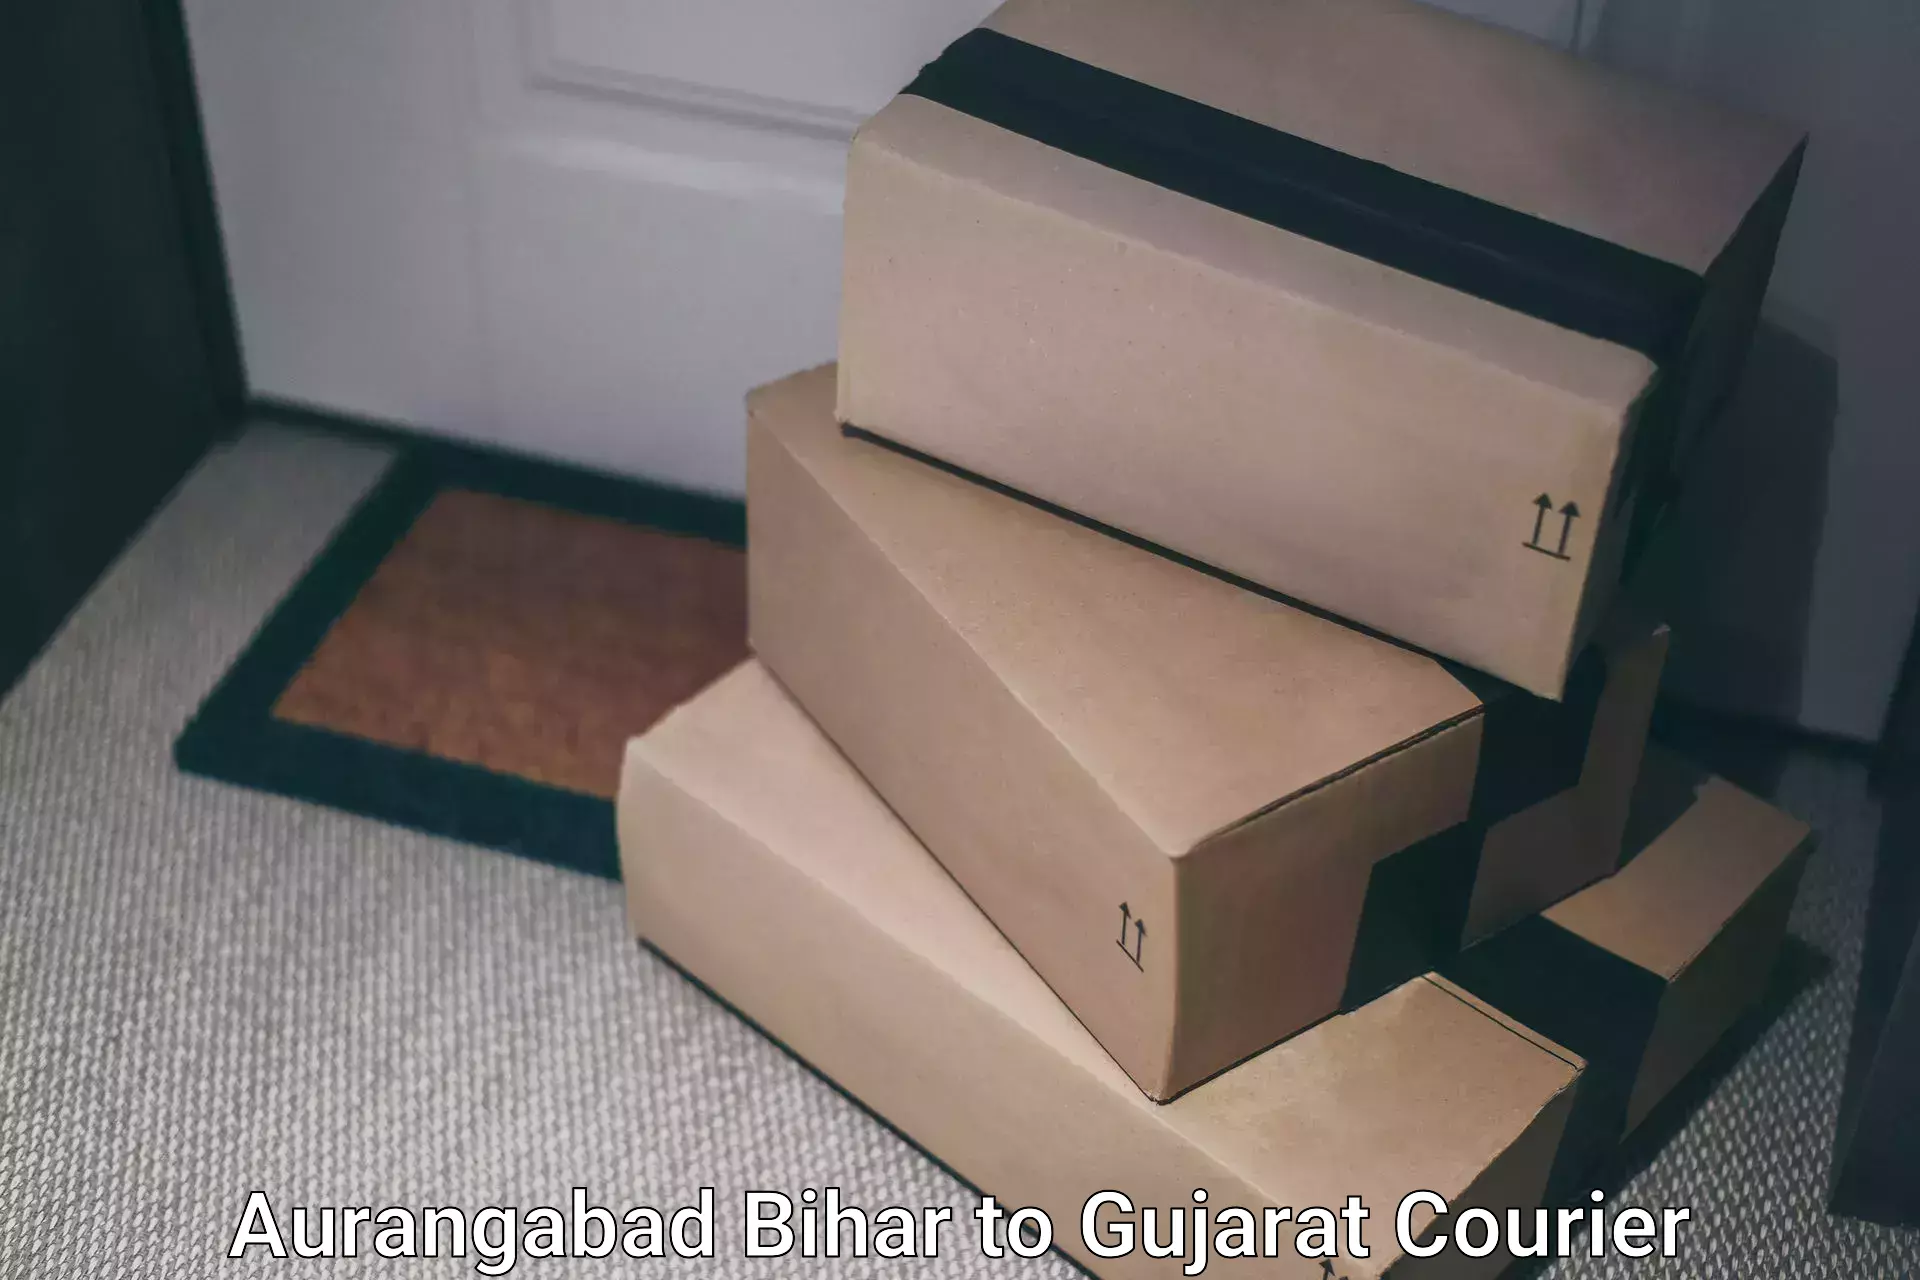 Professional parcel services Aurangabad Bihar to GIDC